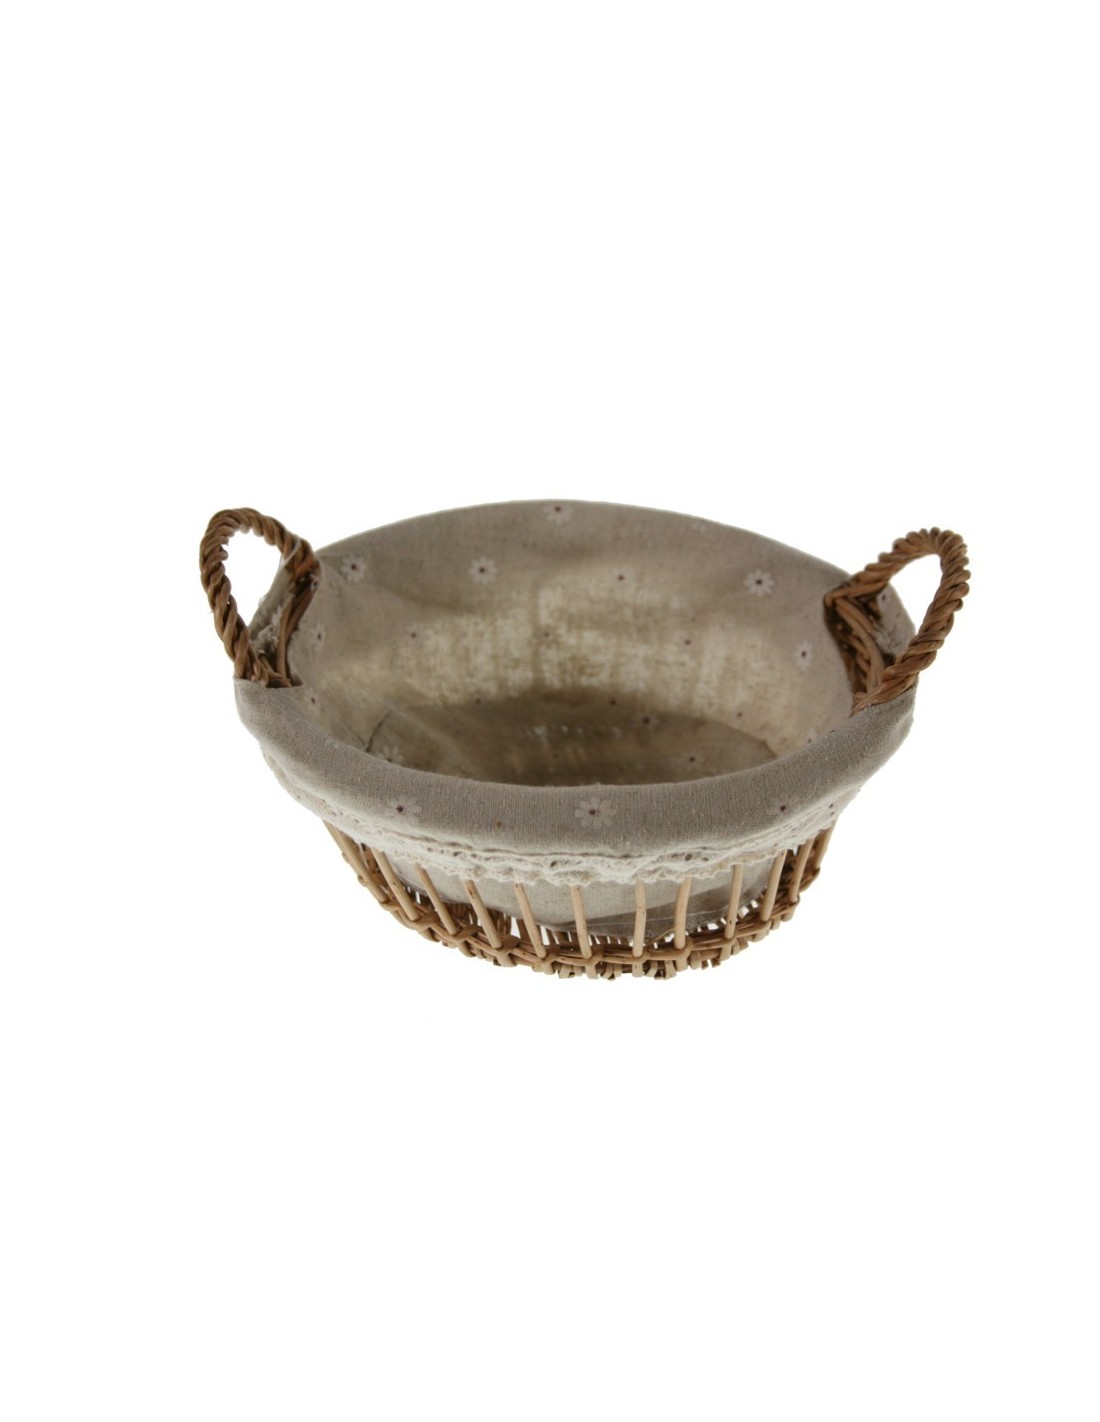 Panera o cesta redonda para el pan de mimbre forrada en tela estilo rústico utensilio de mesa.